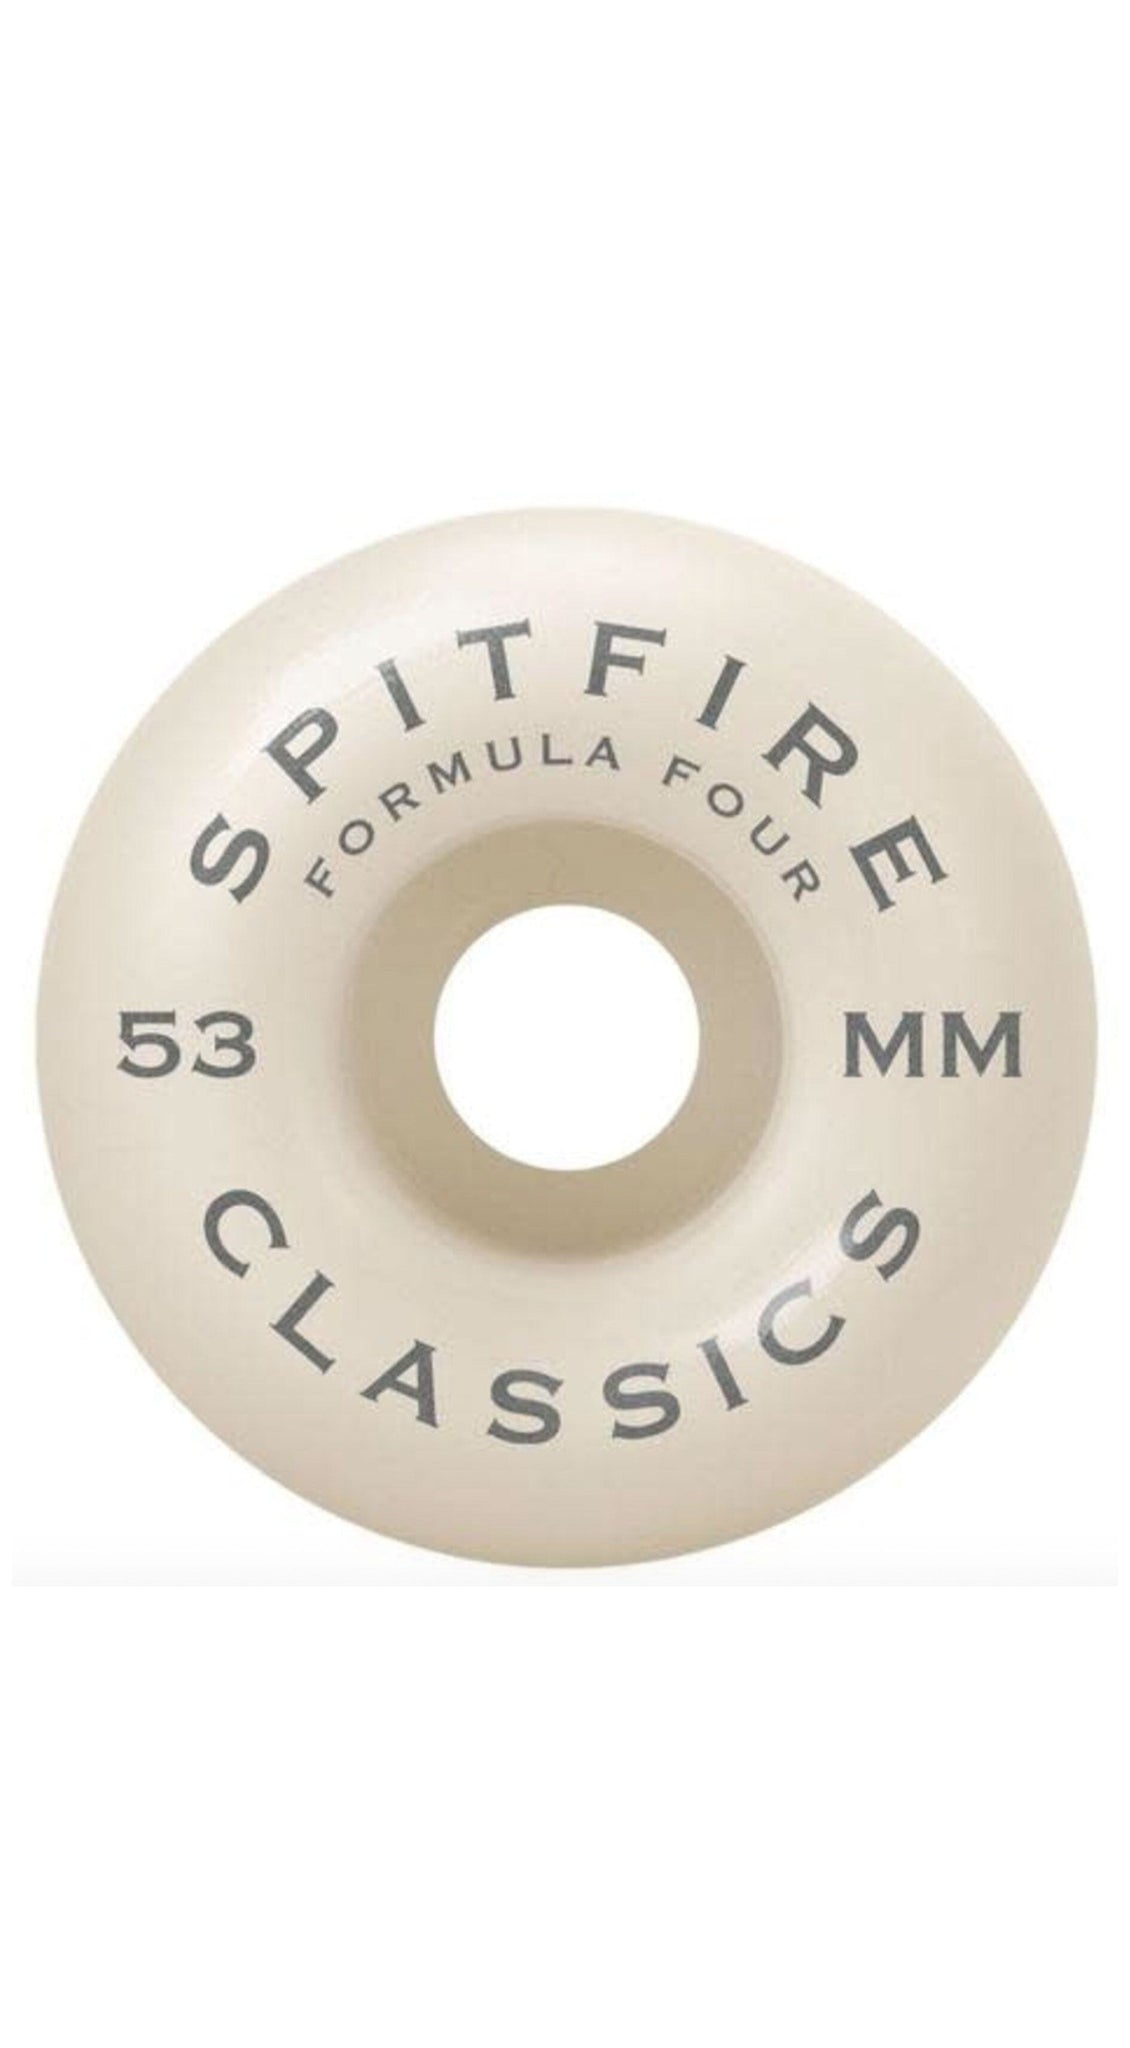 Spitfire F4 99 Classic 53mm Skateboard Wheels- Ruedas Ruedas Spitfire 